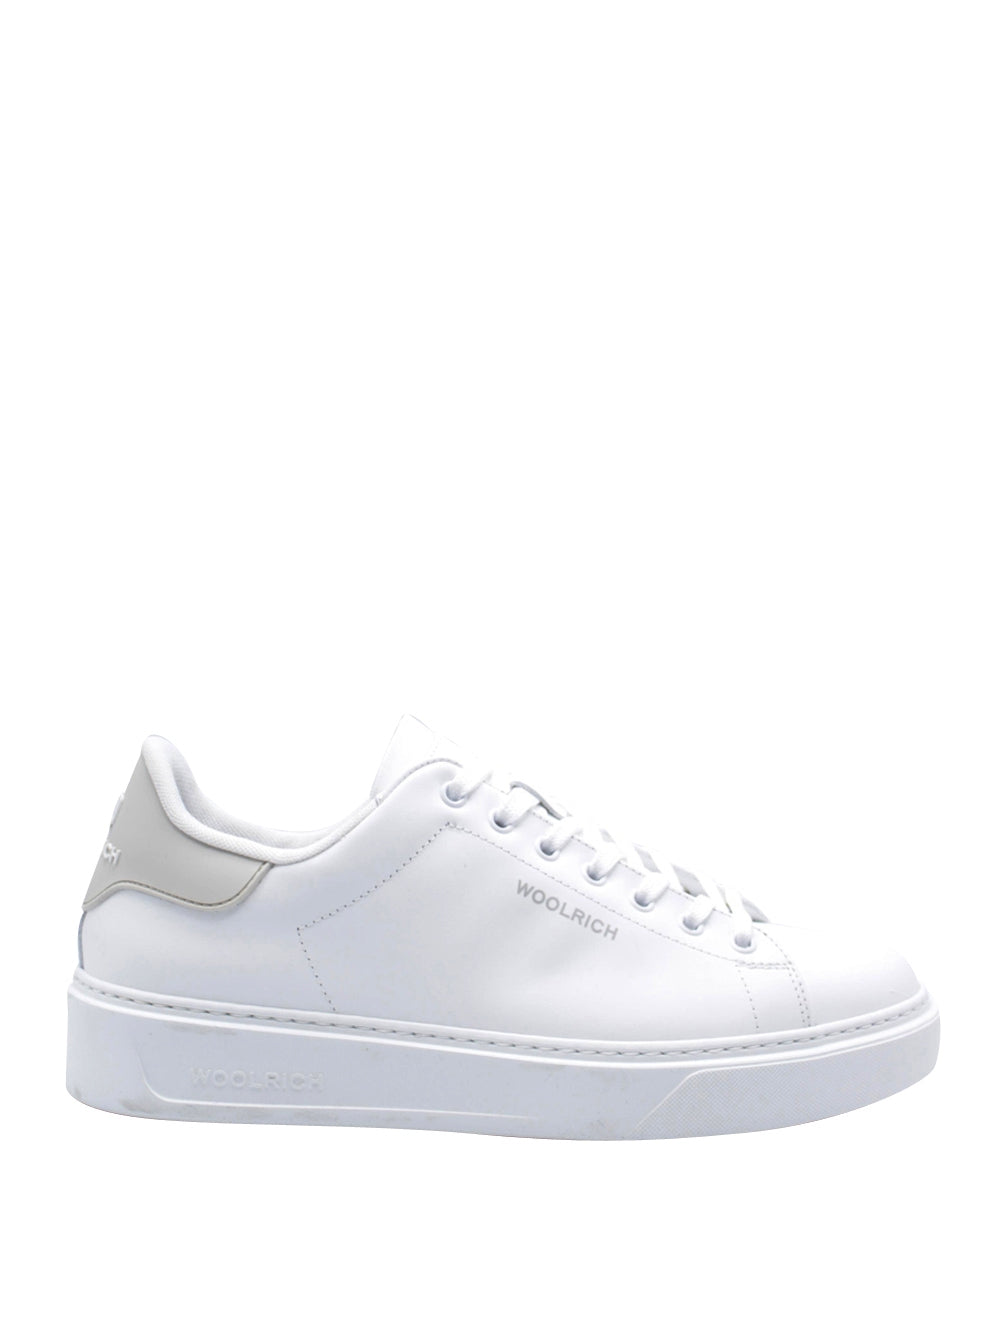 WOOLRICH Sneakers Uomo - Bianco modello WFM241.001